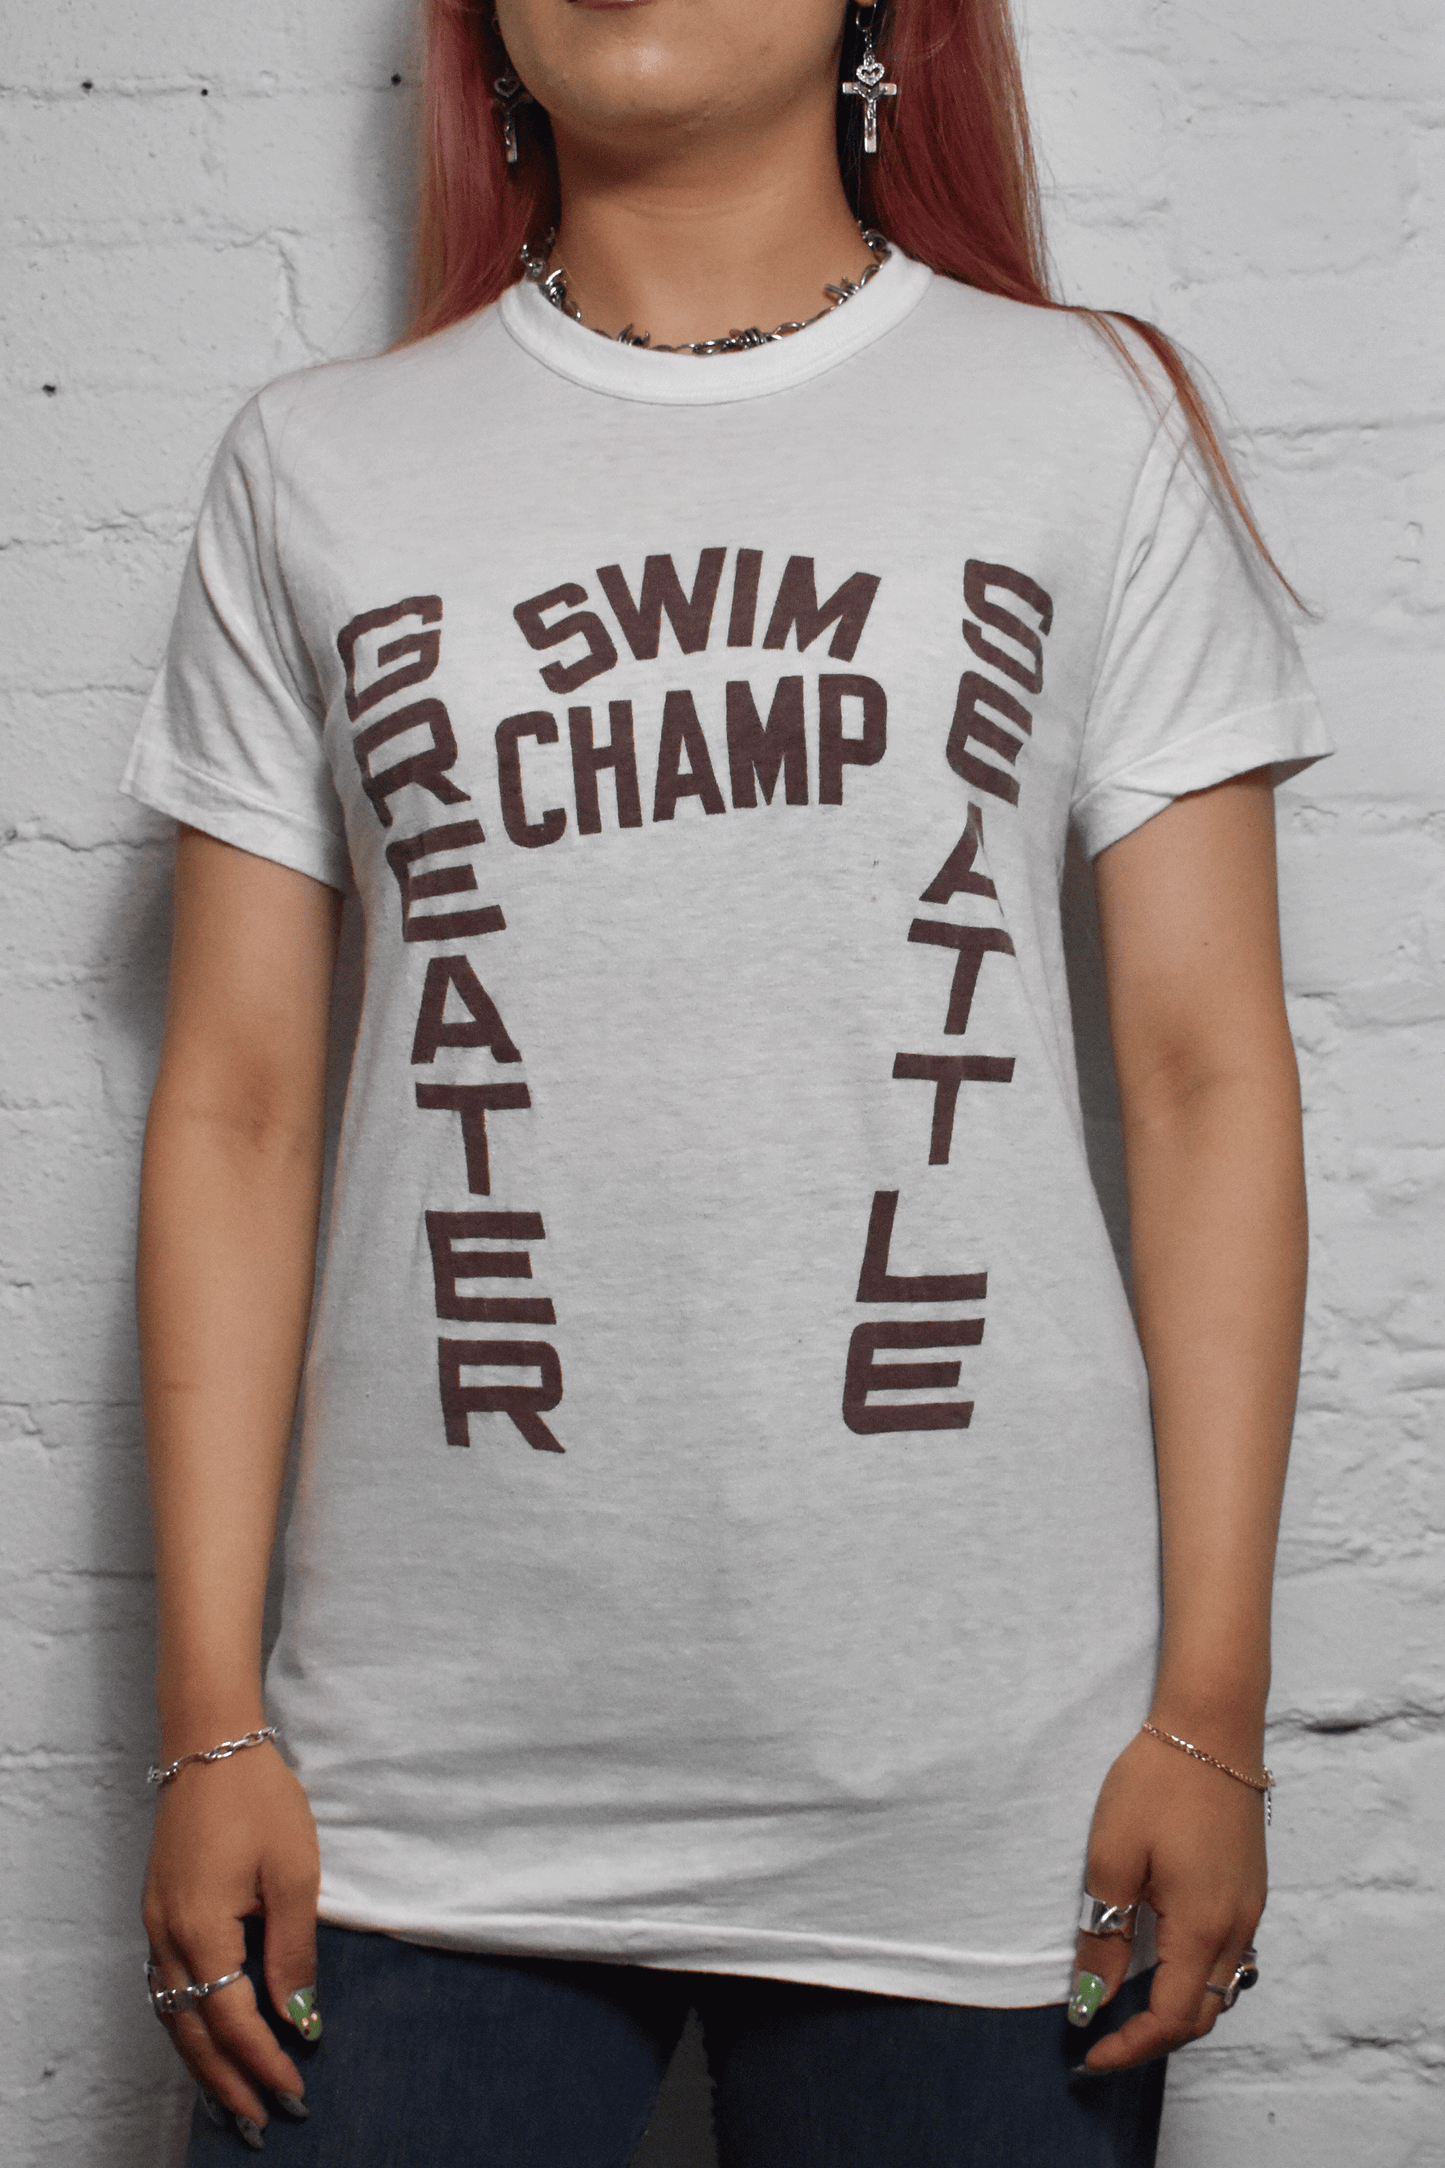 Vintage 1970s "Swim Champ" Seattle T-shirt